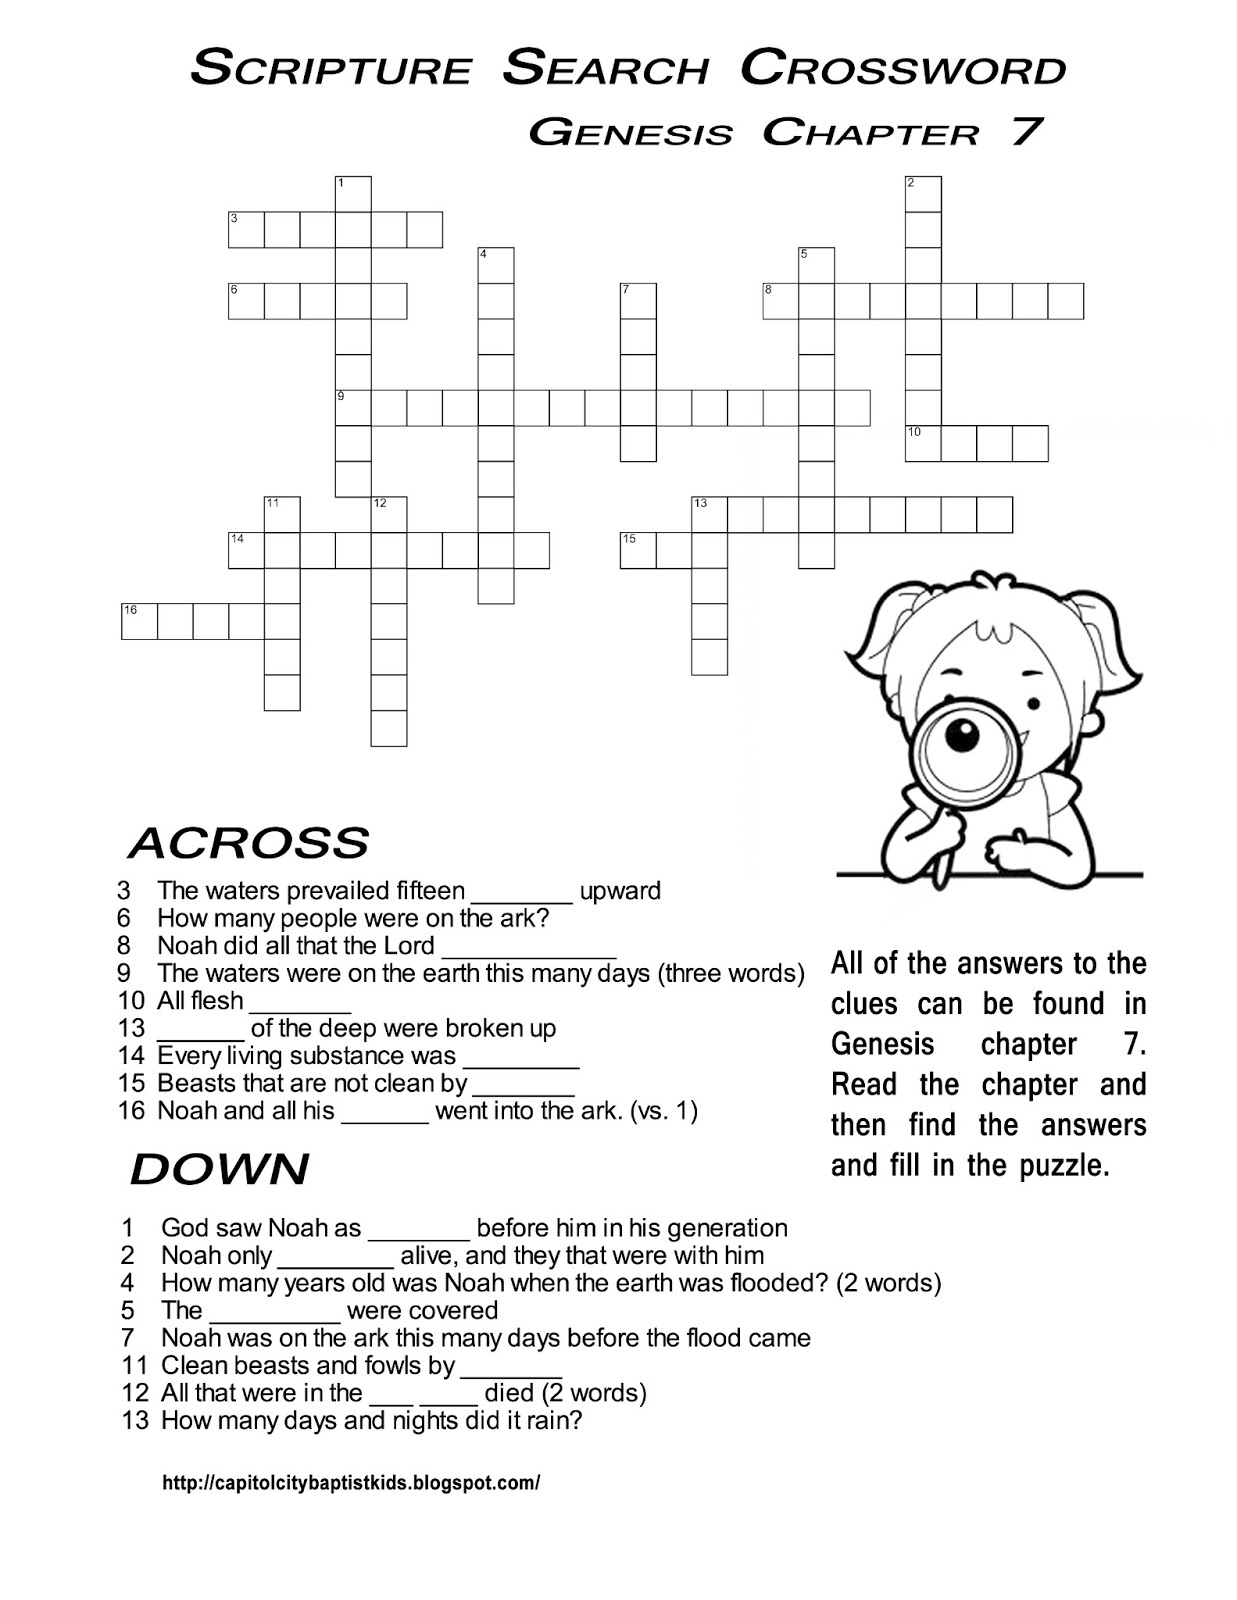 Ccbc Kids Corner: Scripture Search Crossword #2 - Printable Crossword #4